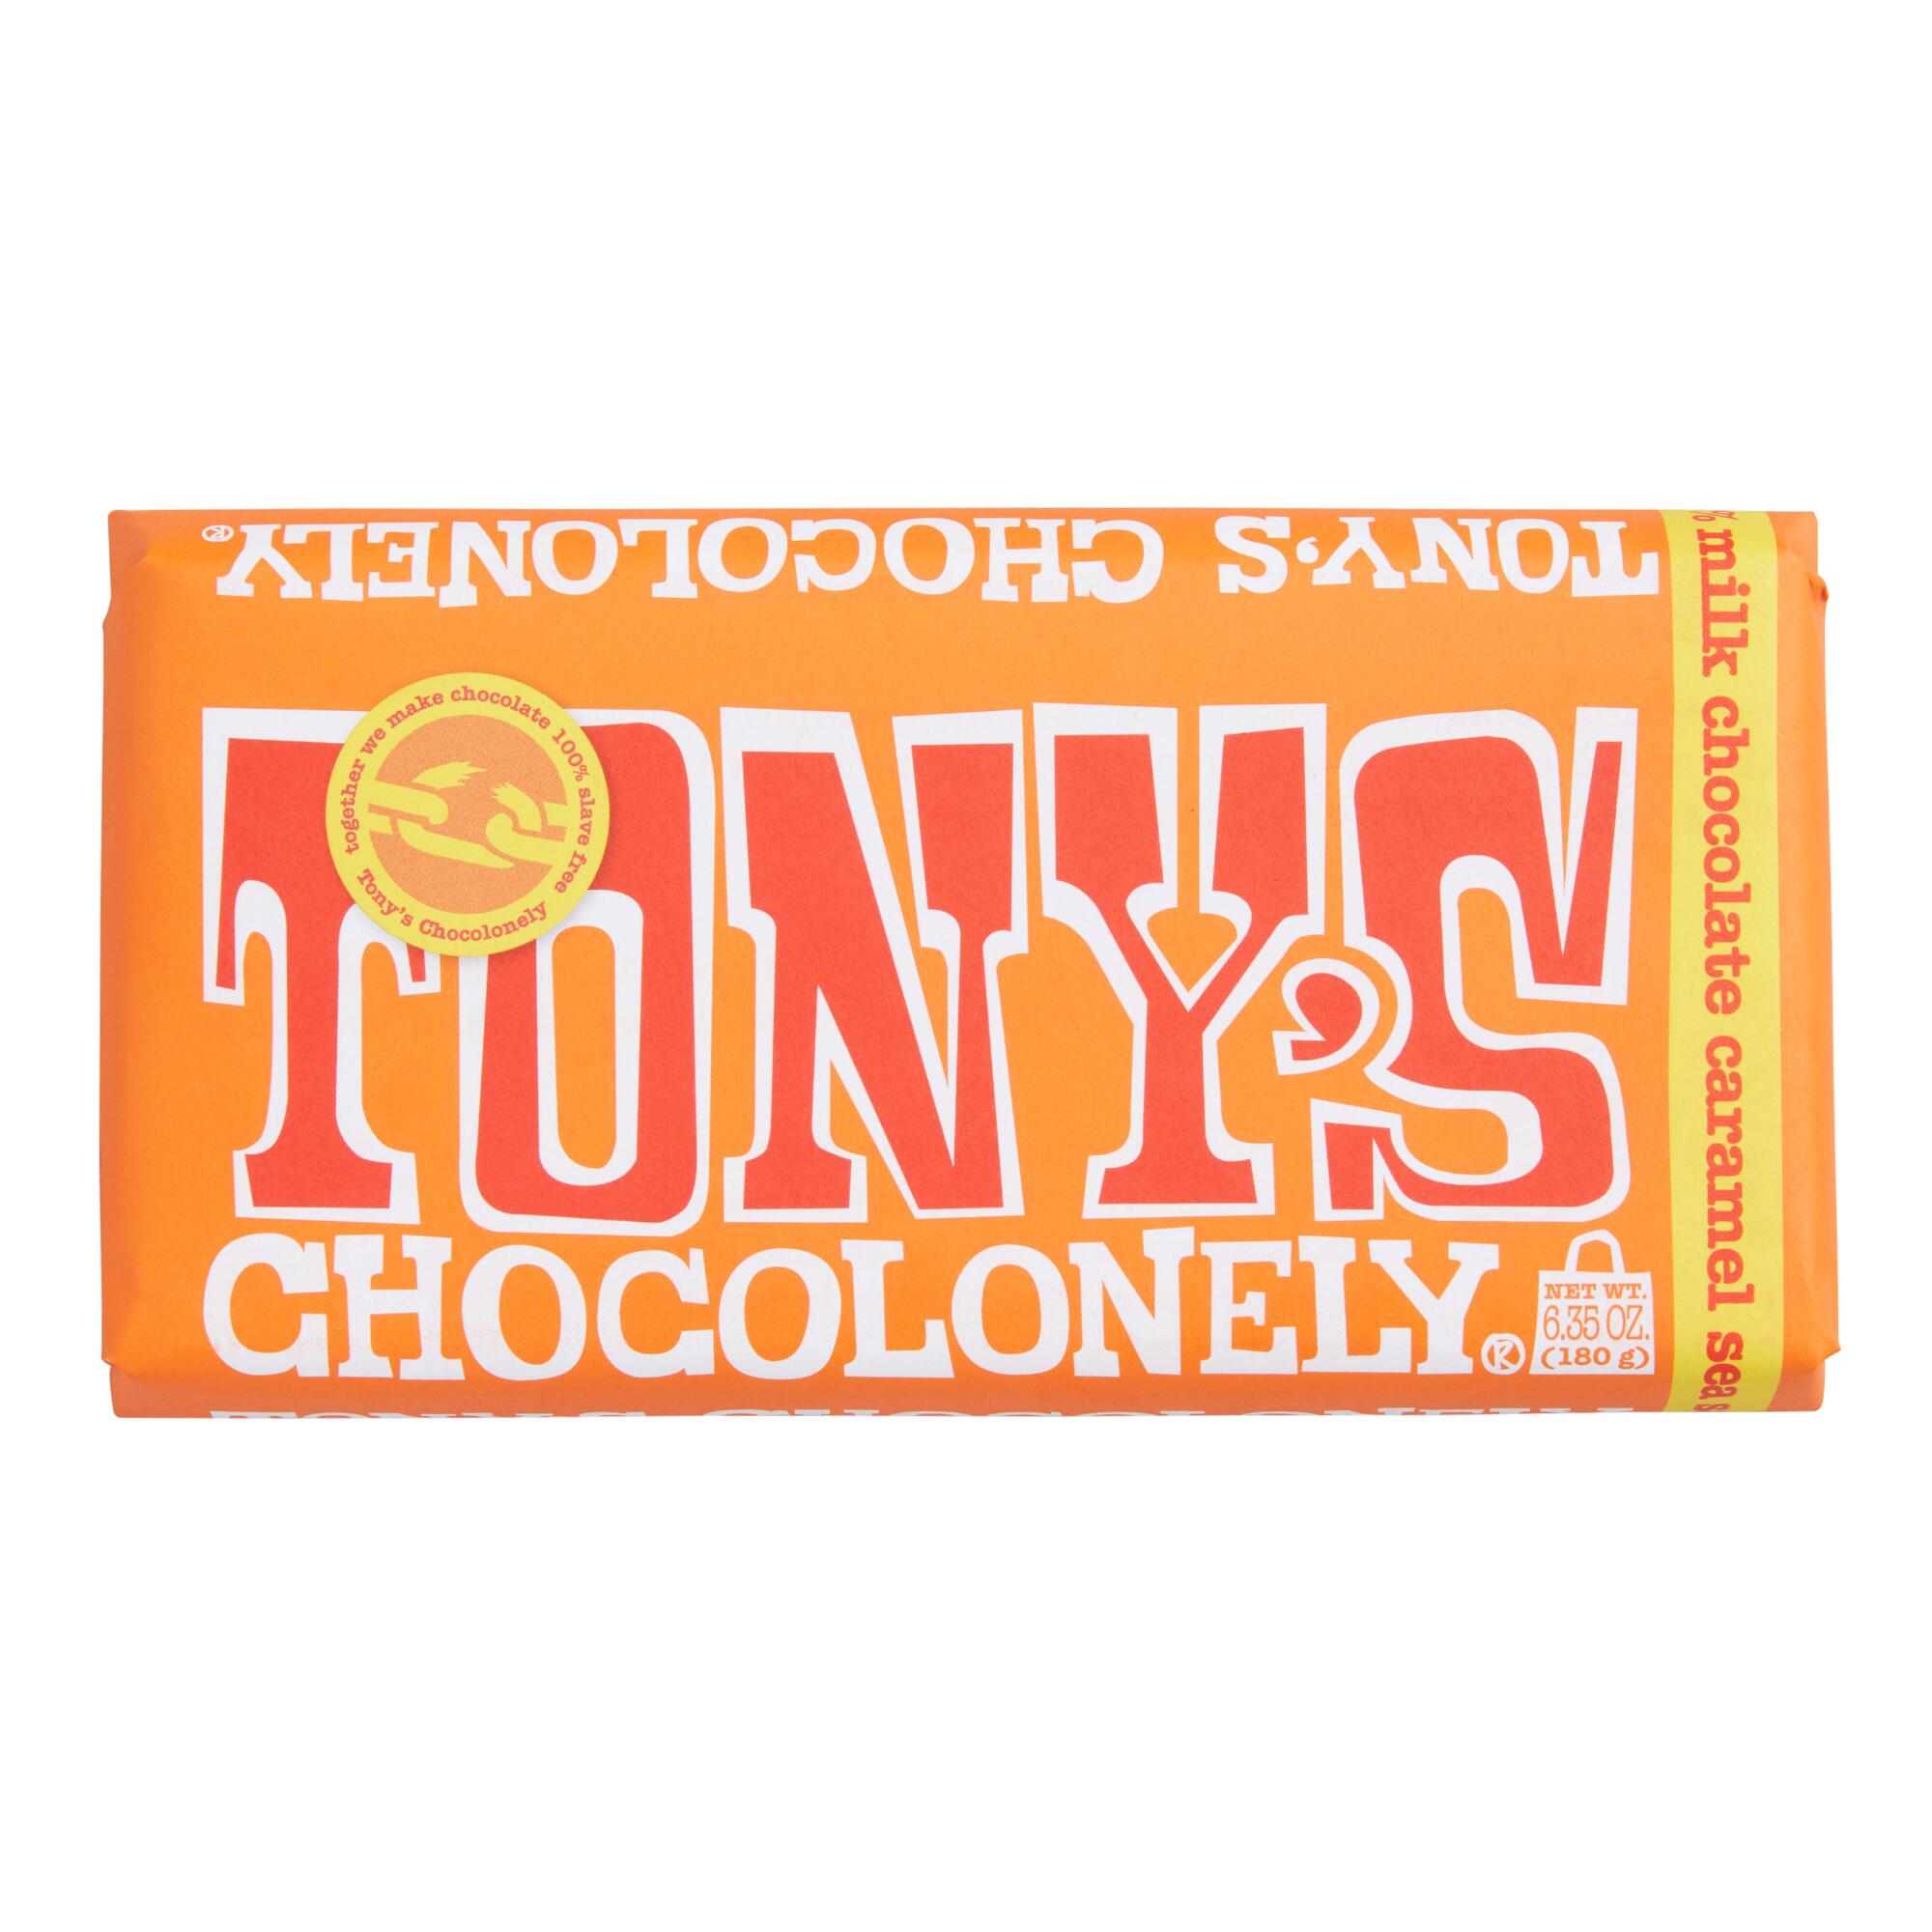 Tony's Chocolonely Caramel Sea Salt Milk Chocolate Bar by World Market